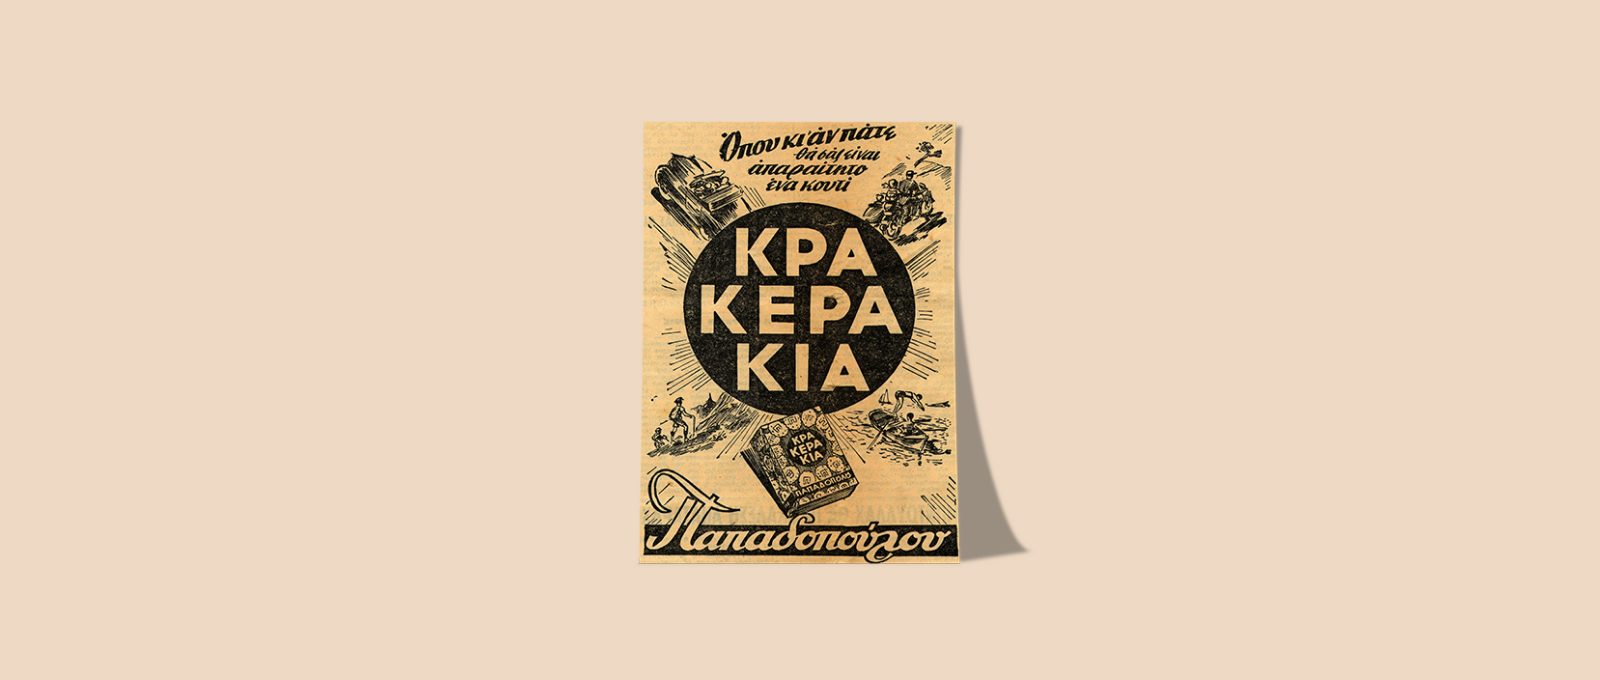 Company newspaper ad for Krakerakia from the 1950s